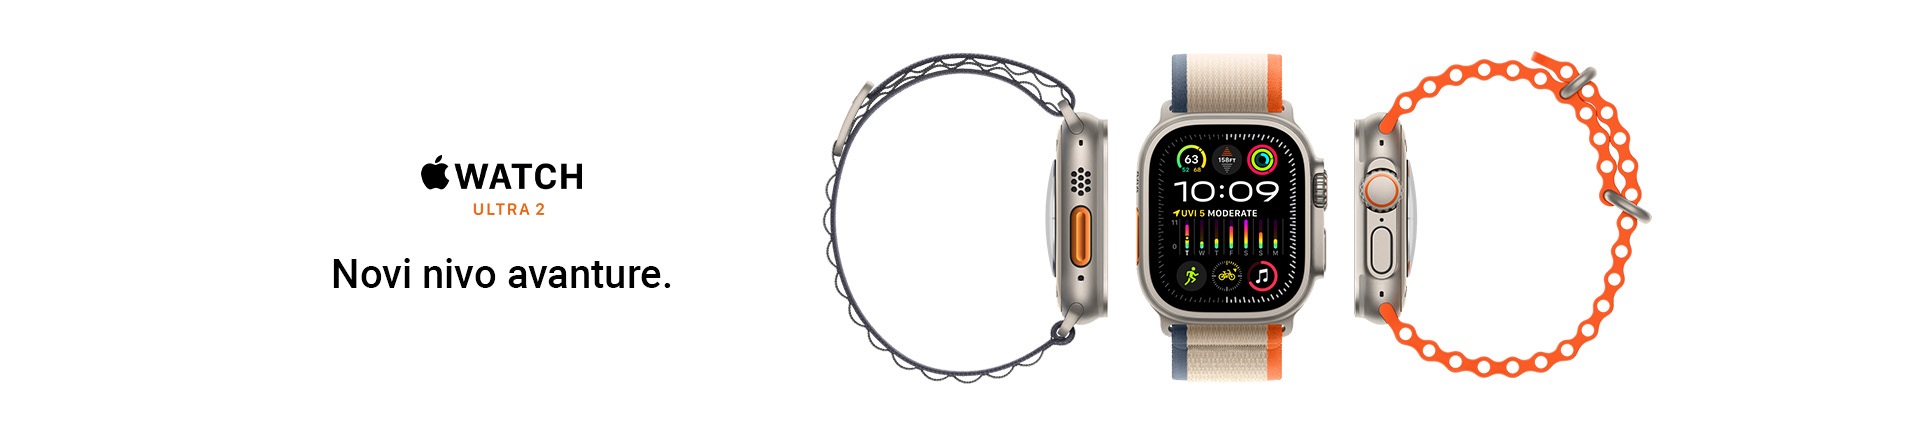 CG~Apple Watch Ultra 2 MOBILE 380 X 436 LANDING.jpg